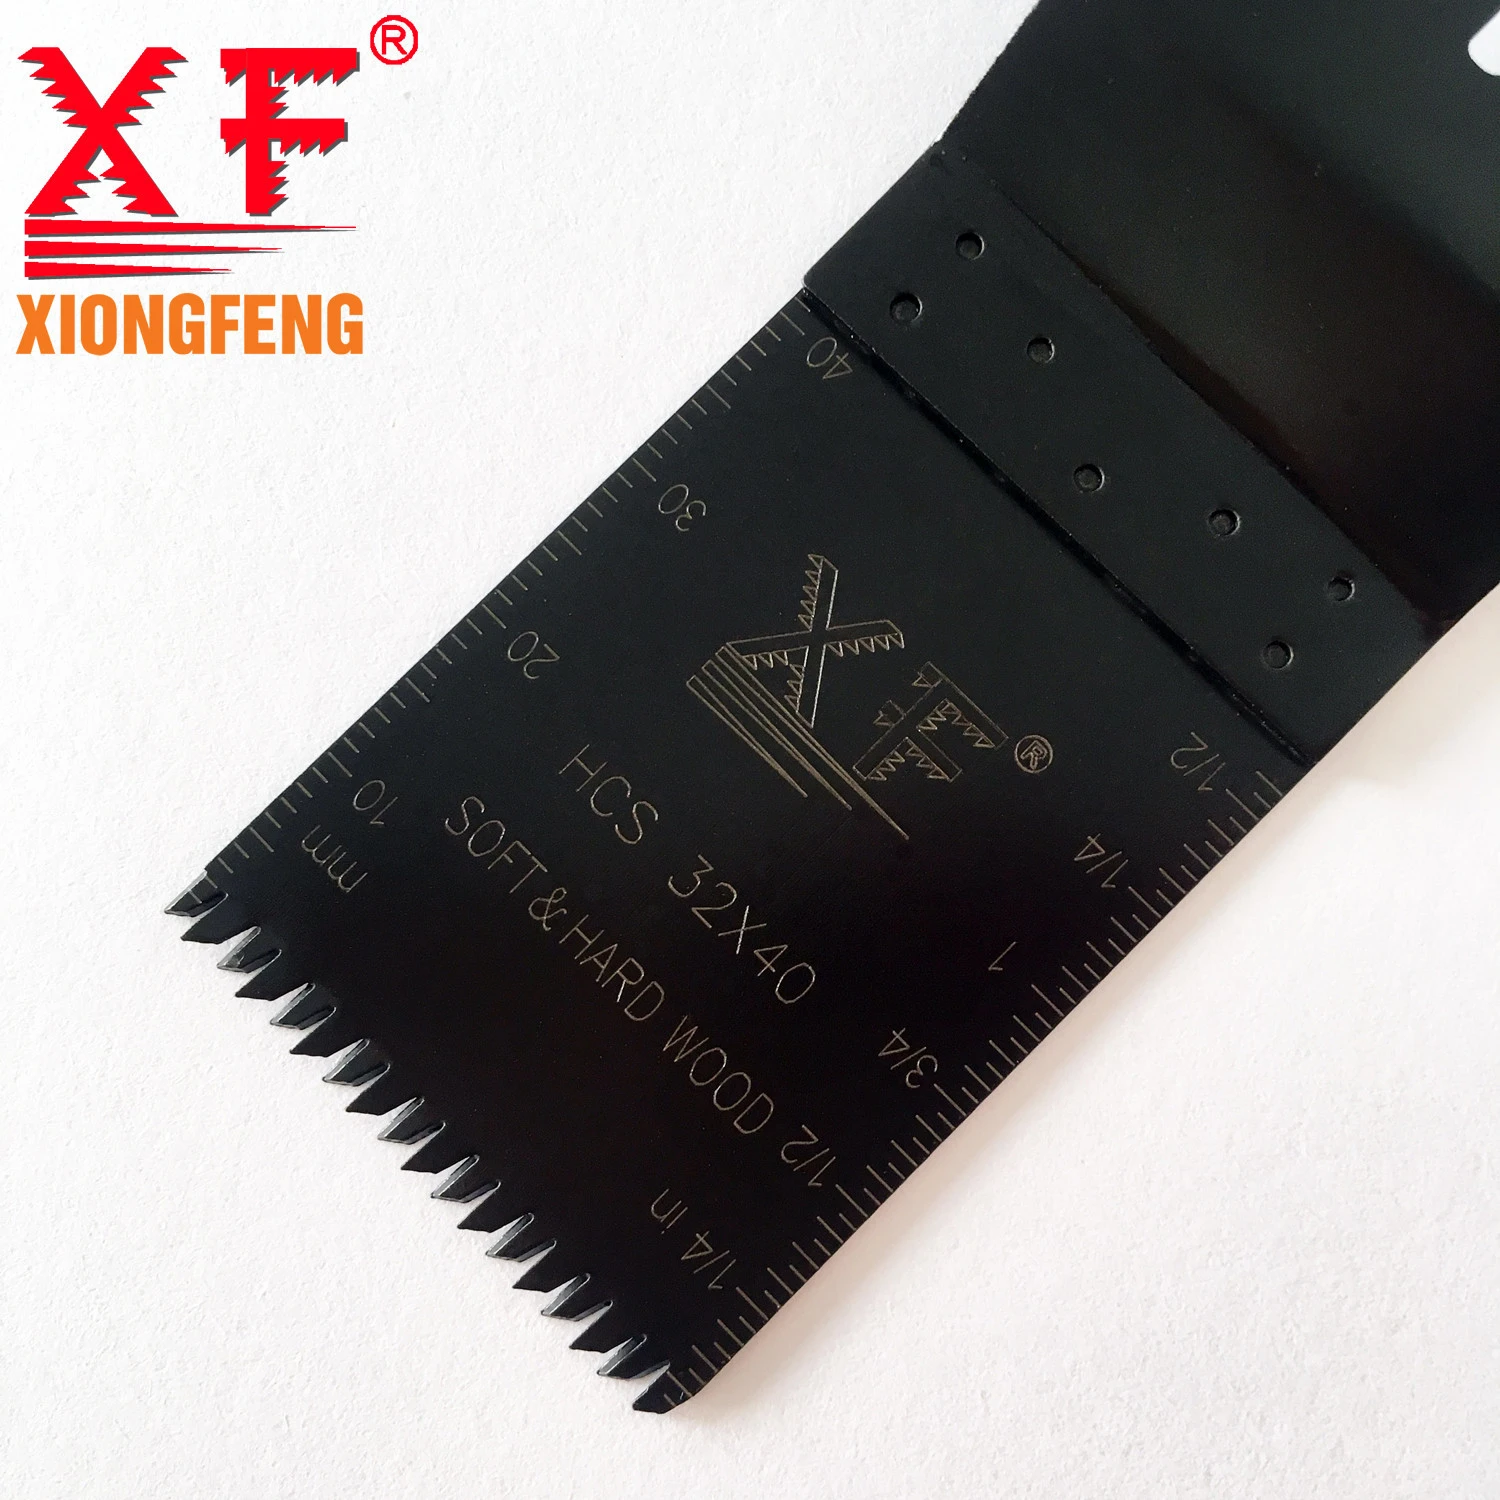 XF-Z017:High Quality Oscillating Multitool Saw Blades